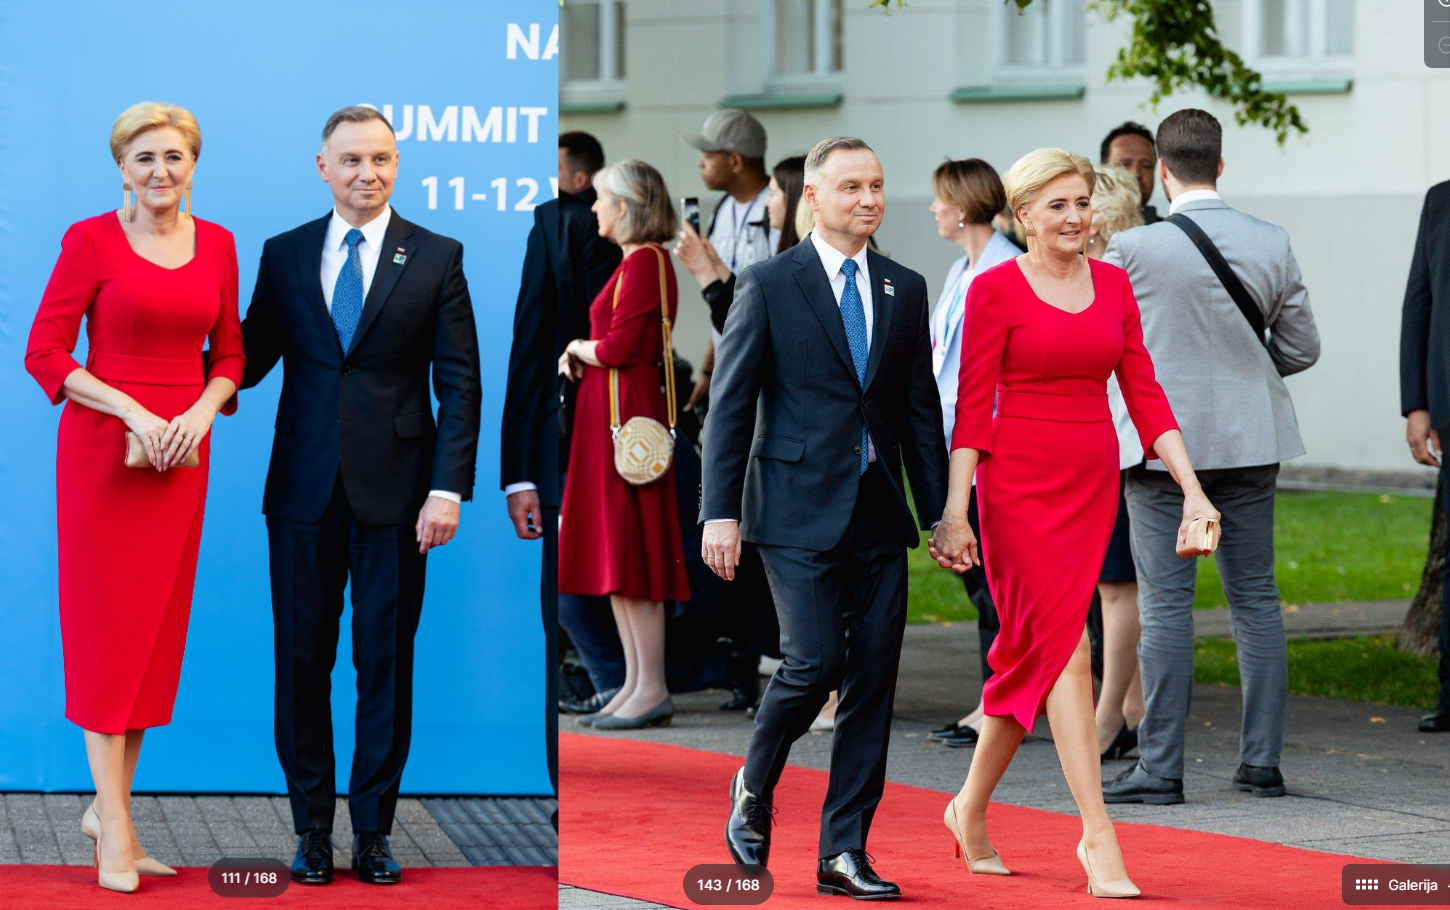 NATO summit in Vilnius. Agata Kornhauser-Duda on the red carpet in a DE MARCO formal dress